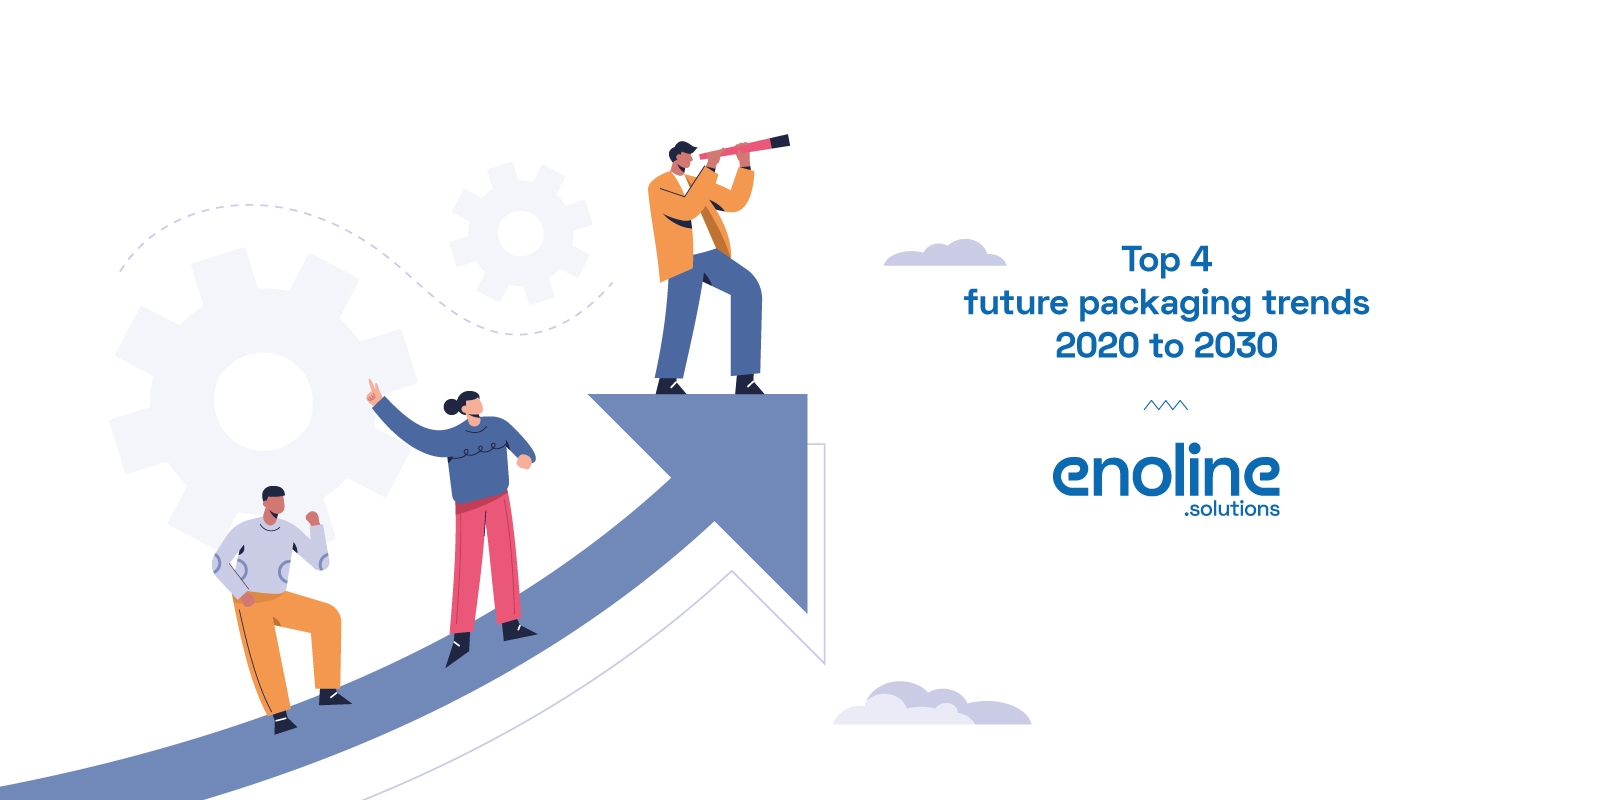 Top 4 future packaging trends 2020 2030 enoline